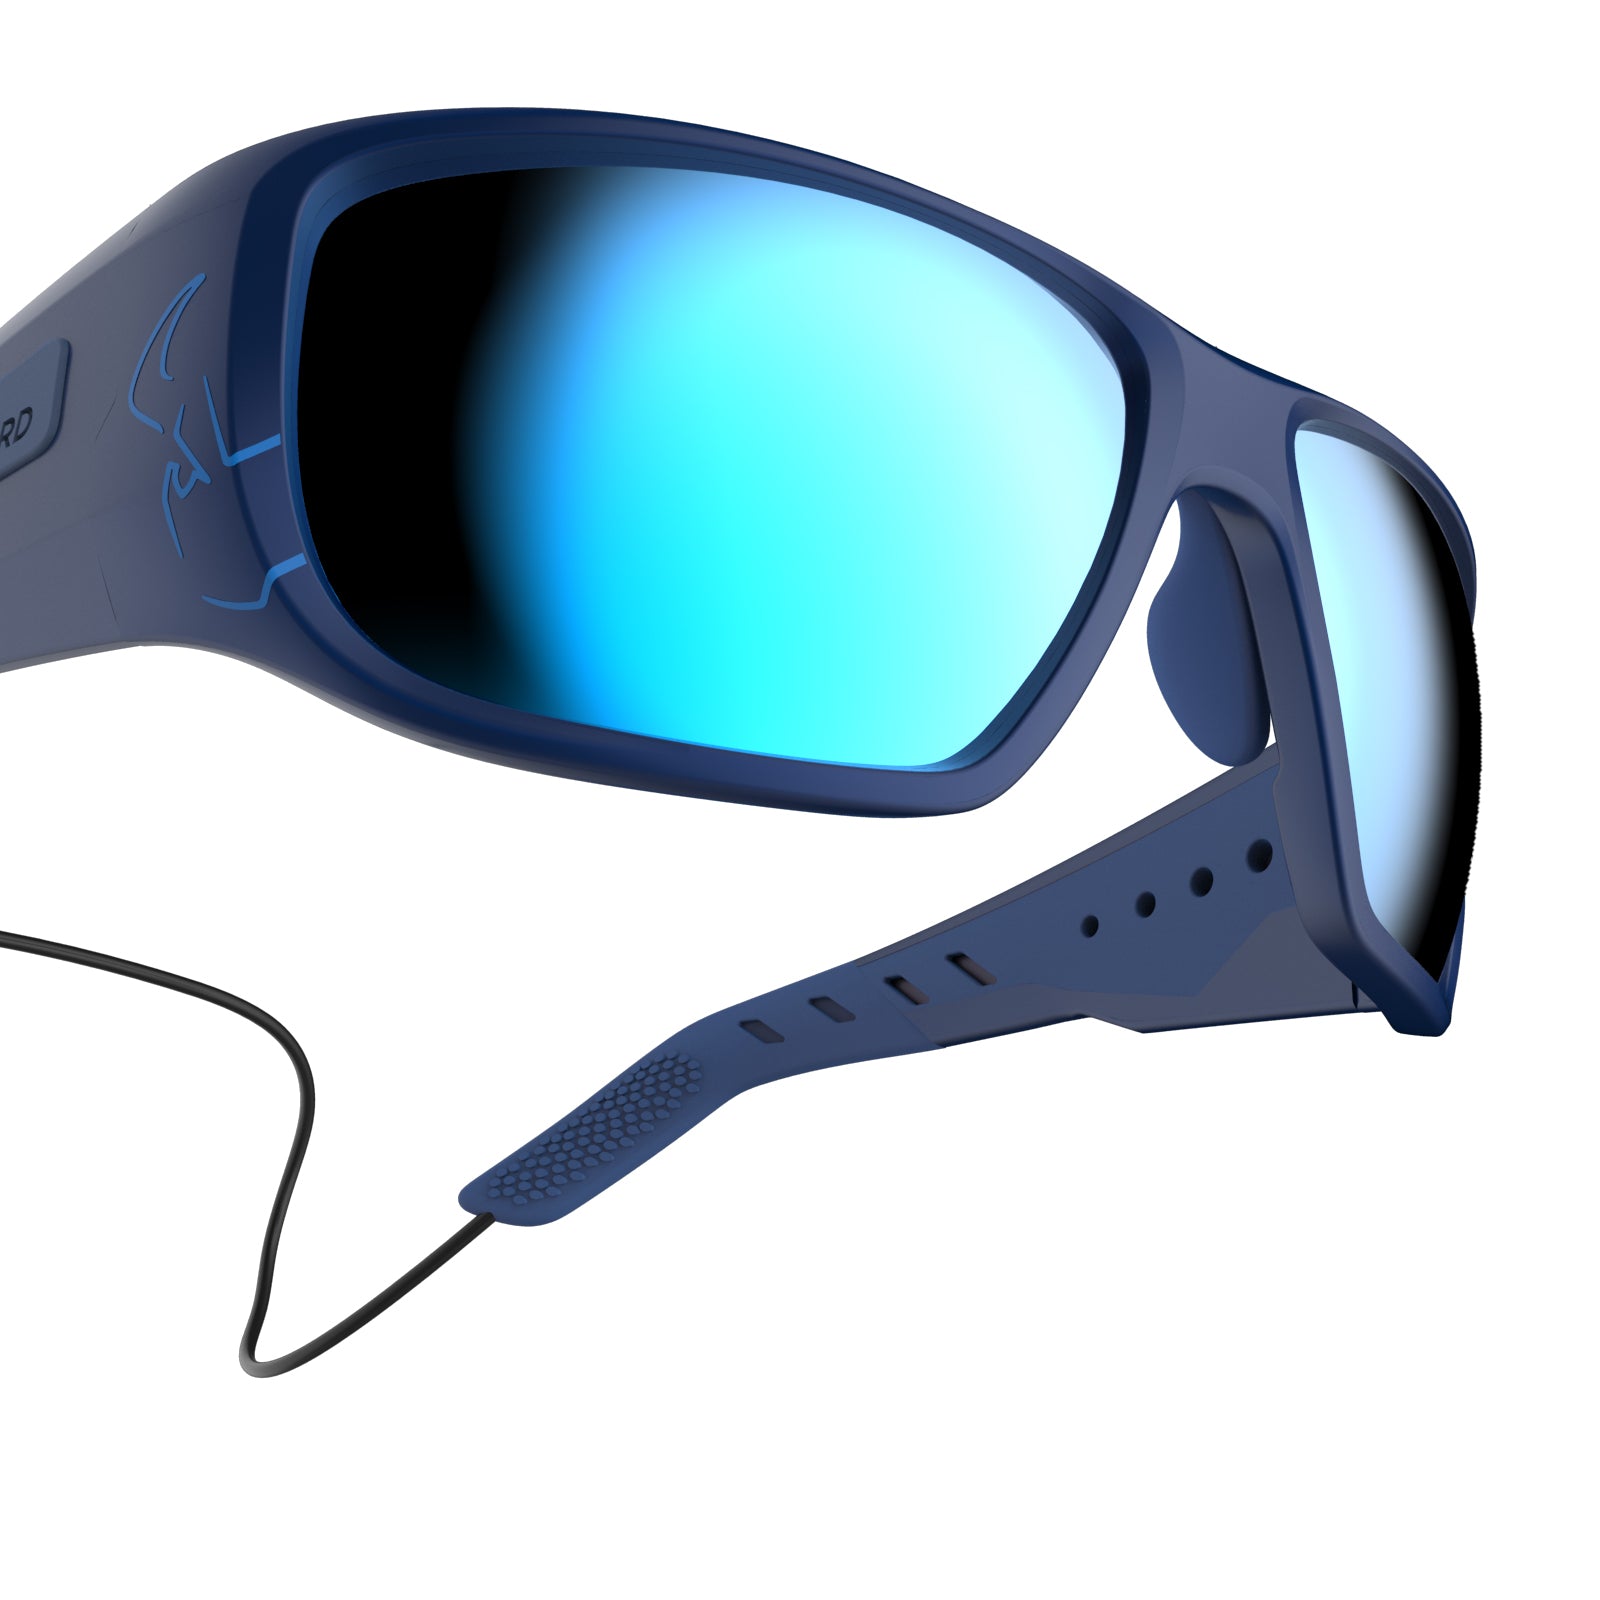 Forward XL Gust Evo Sunglasses - Blue frame, Blue mirror lens